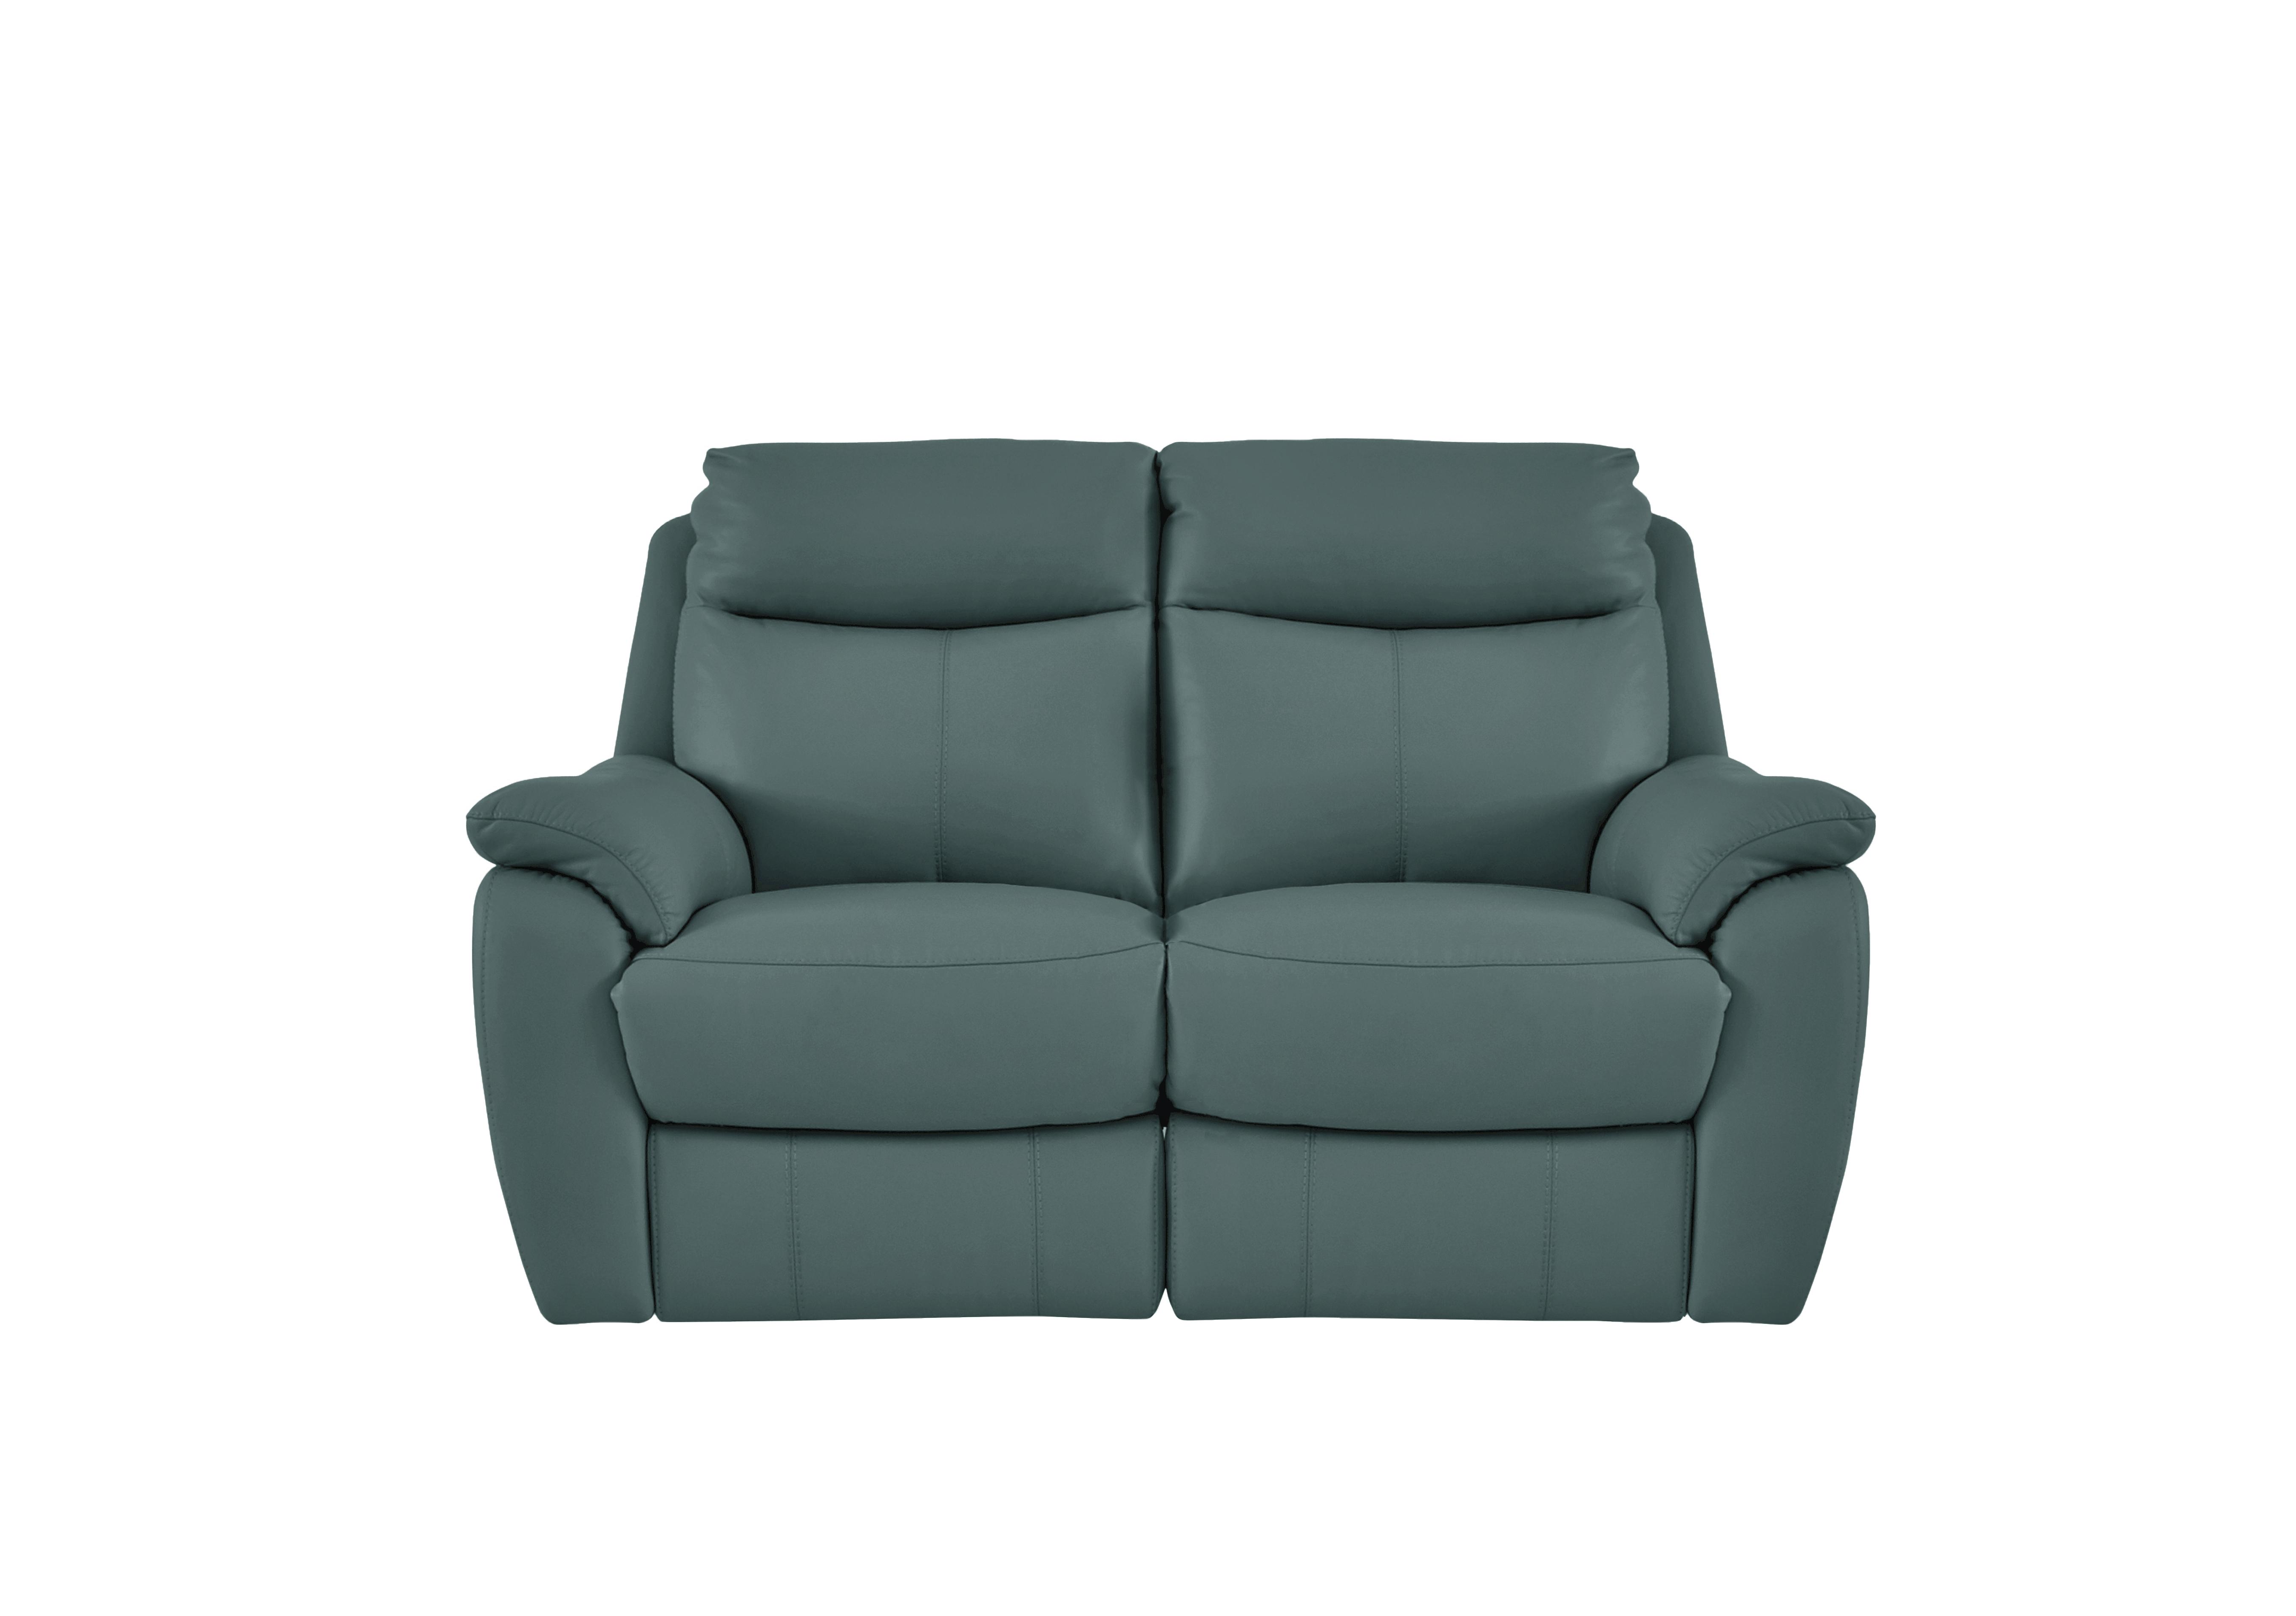 Snug 2 Seater Leather Sofa in Bv-301e Lake Green on Furniture Village